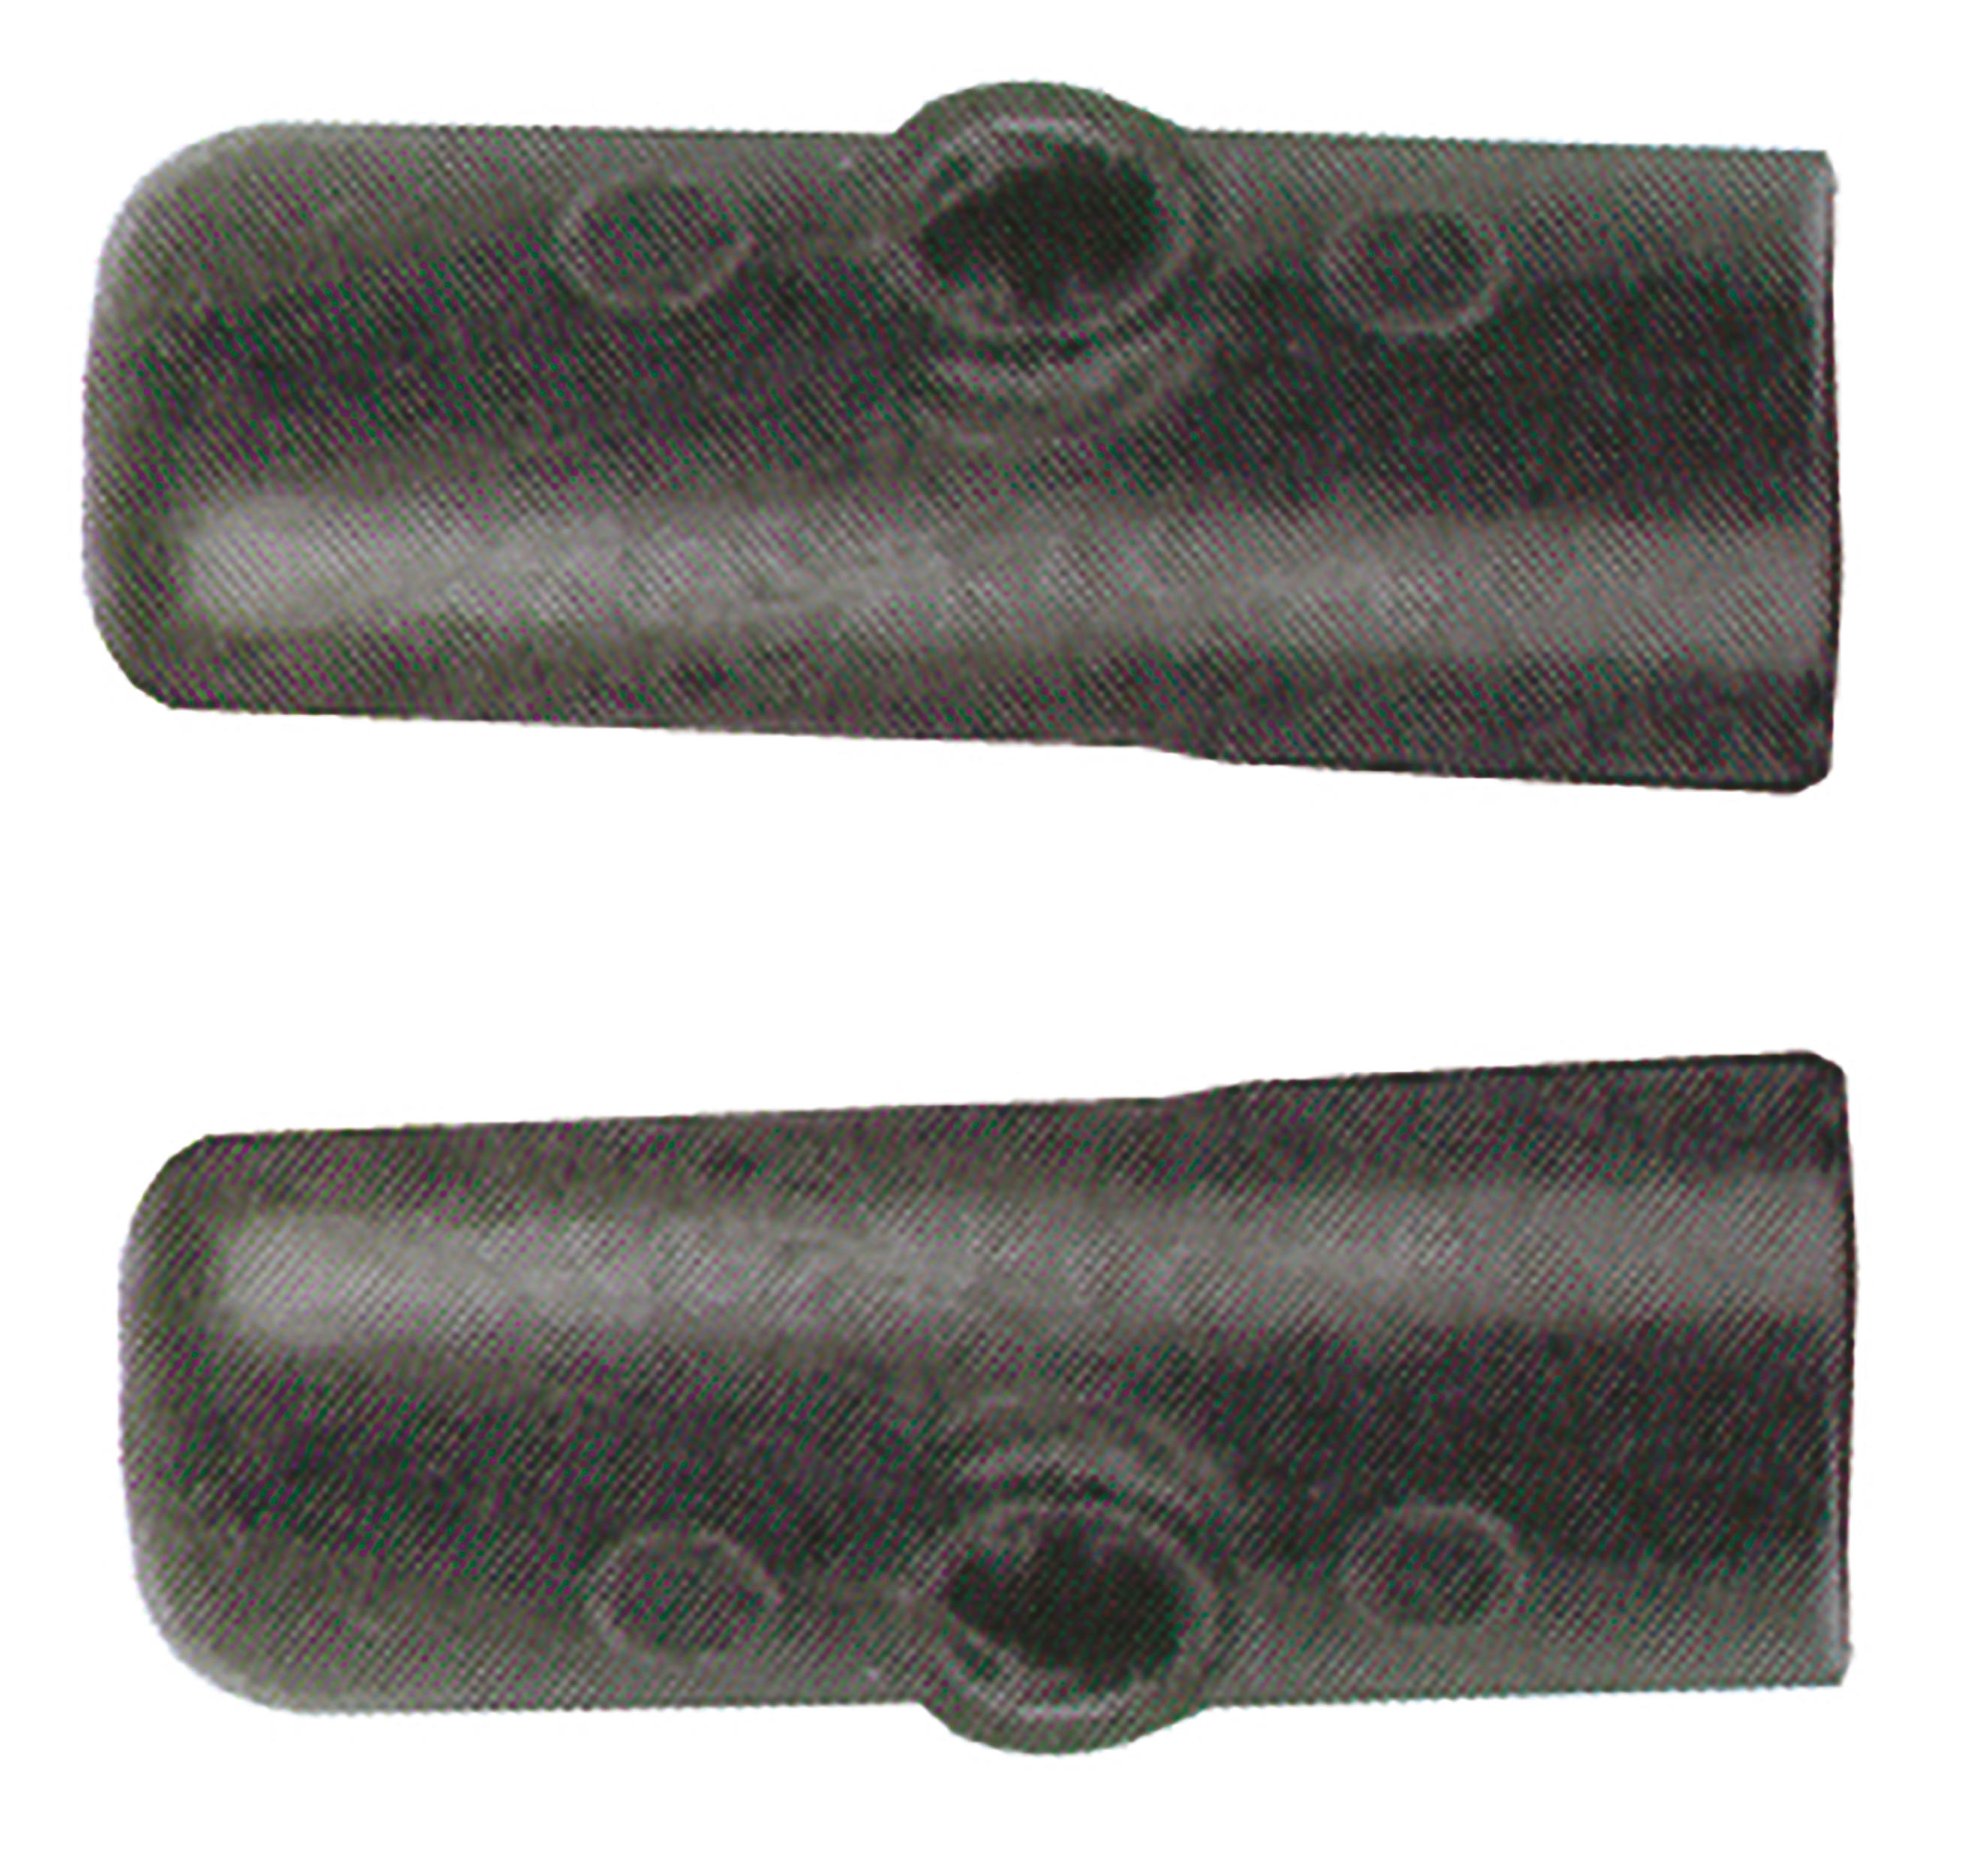 Electrode holder w. brass bottom and top, black